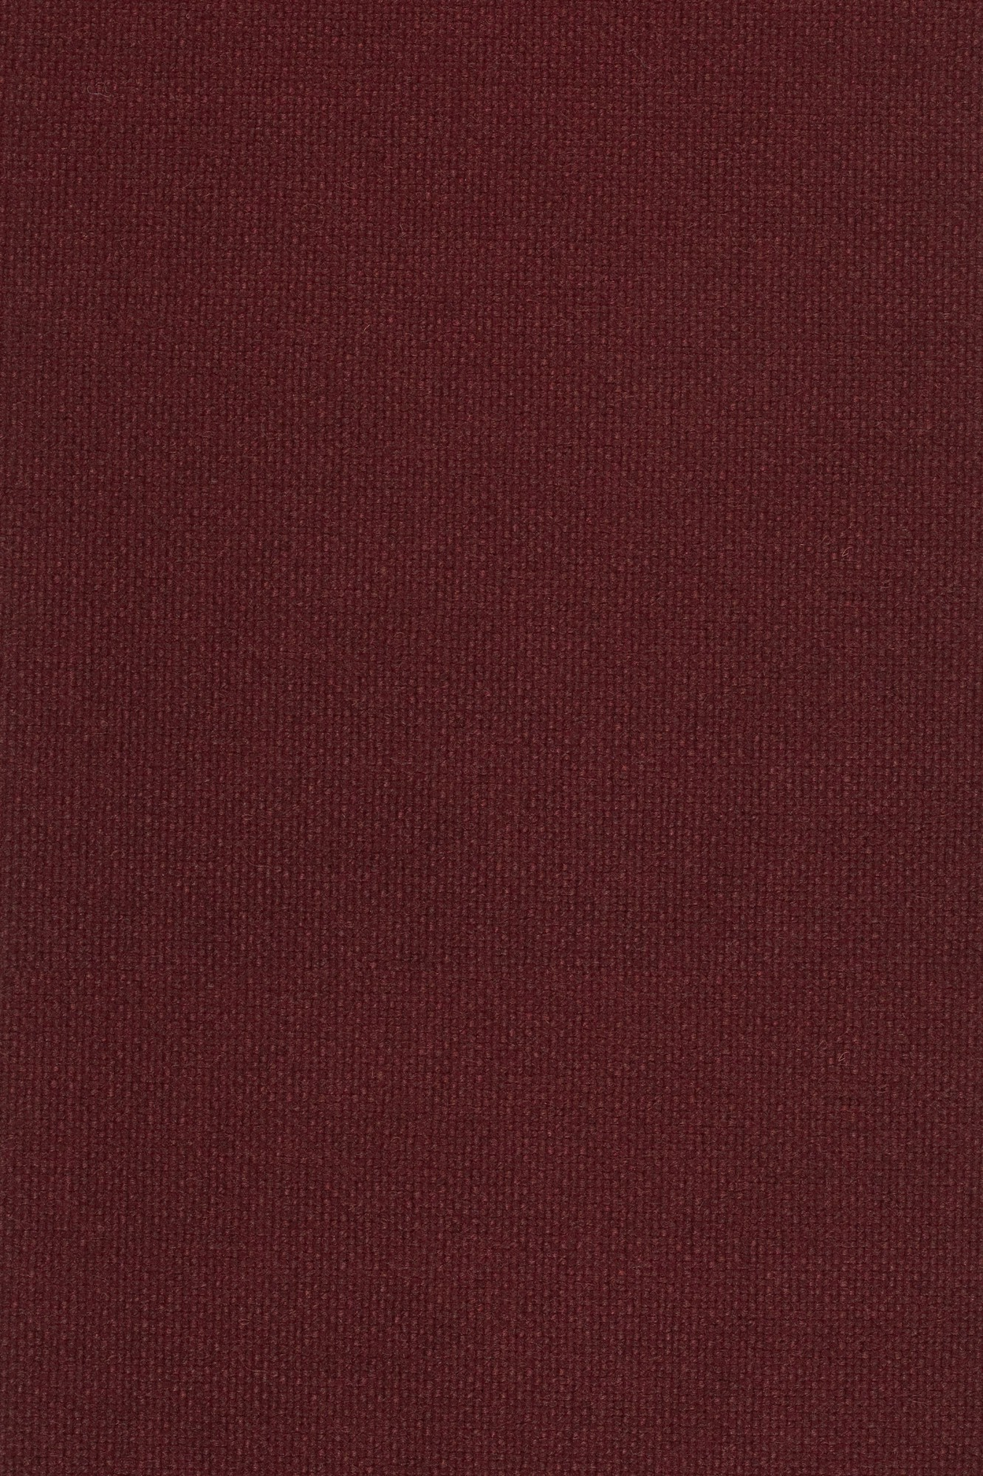 Fabric sample Hallingdal 65 694 red